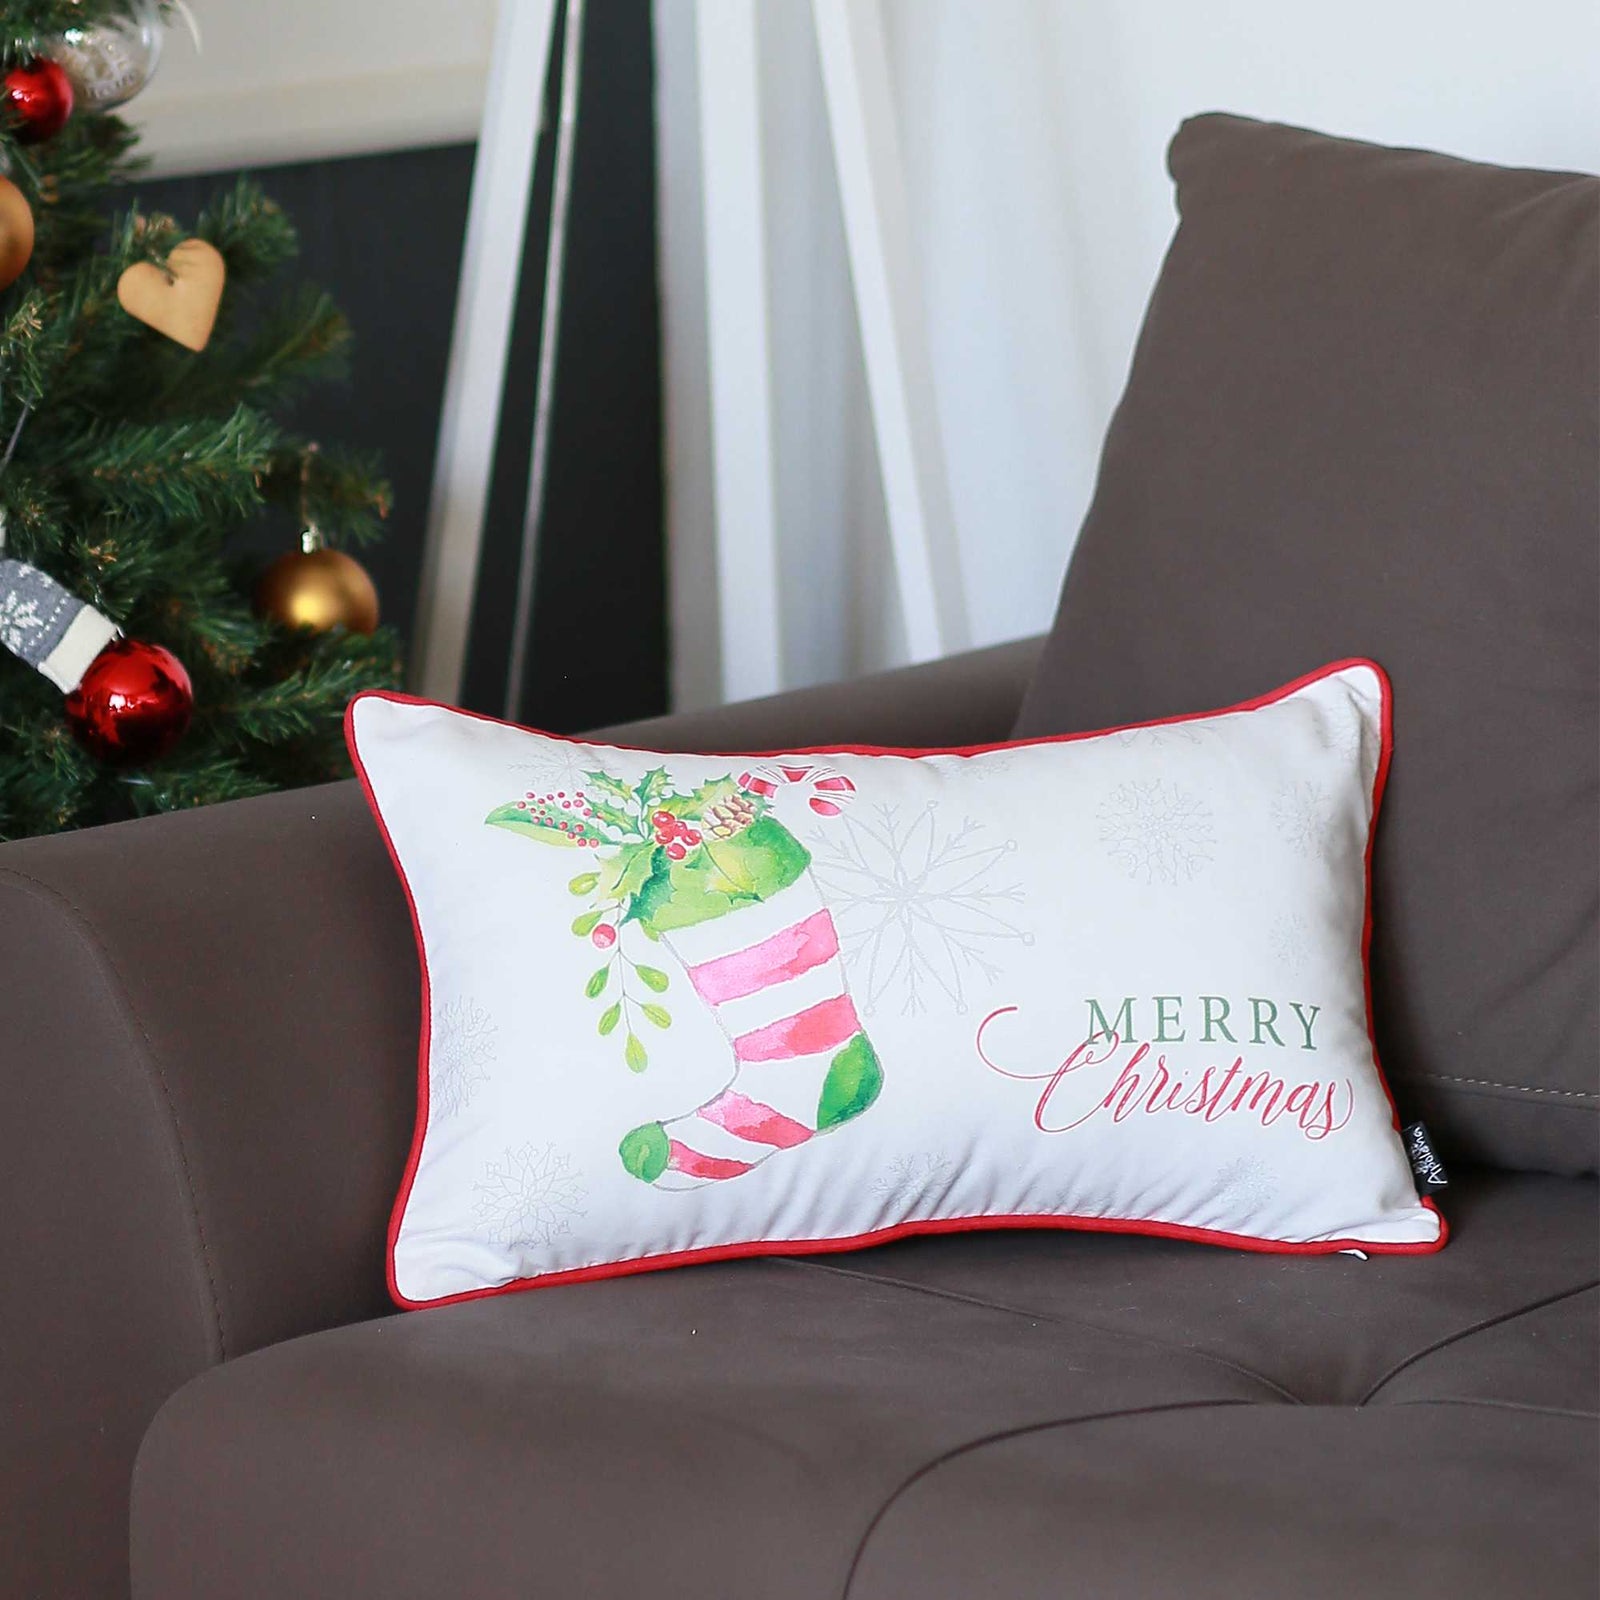 Merry Christmas Filled Stocking Decorative Lumbar Throw Pillow Cover